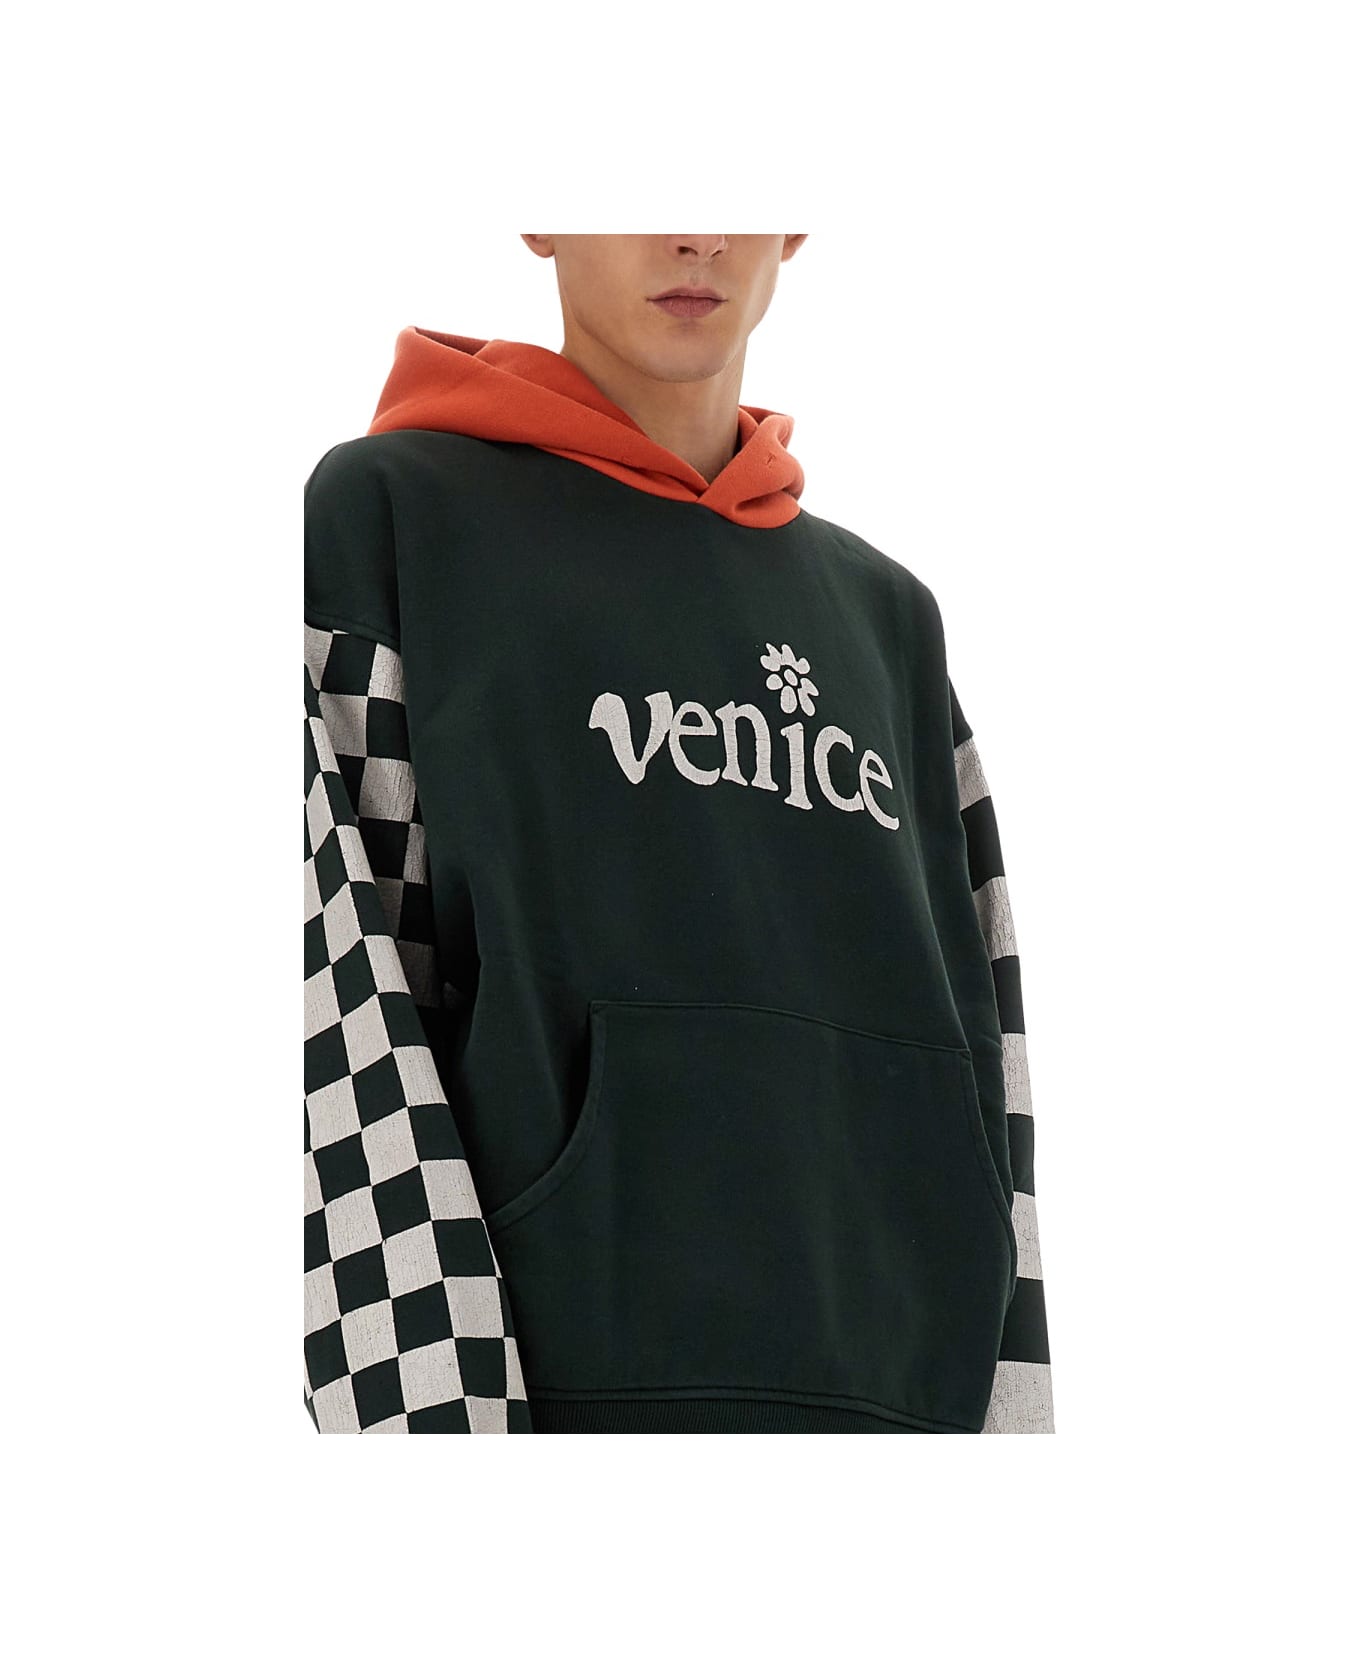 ERL "venice" Sweatshirt - BLACK